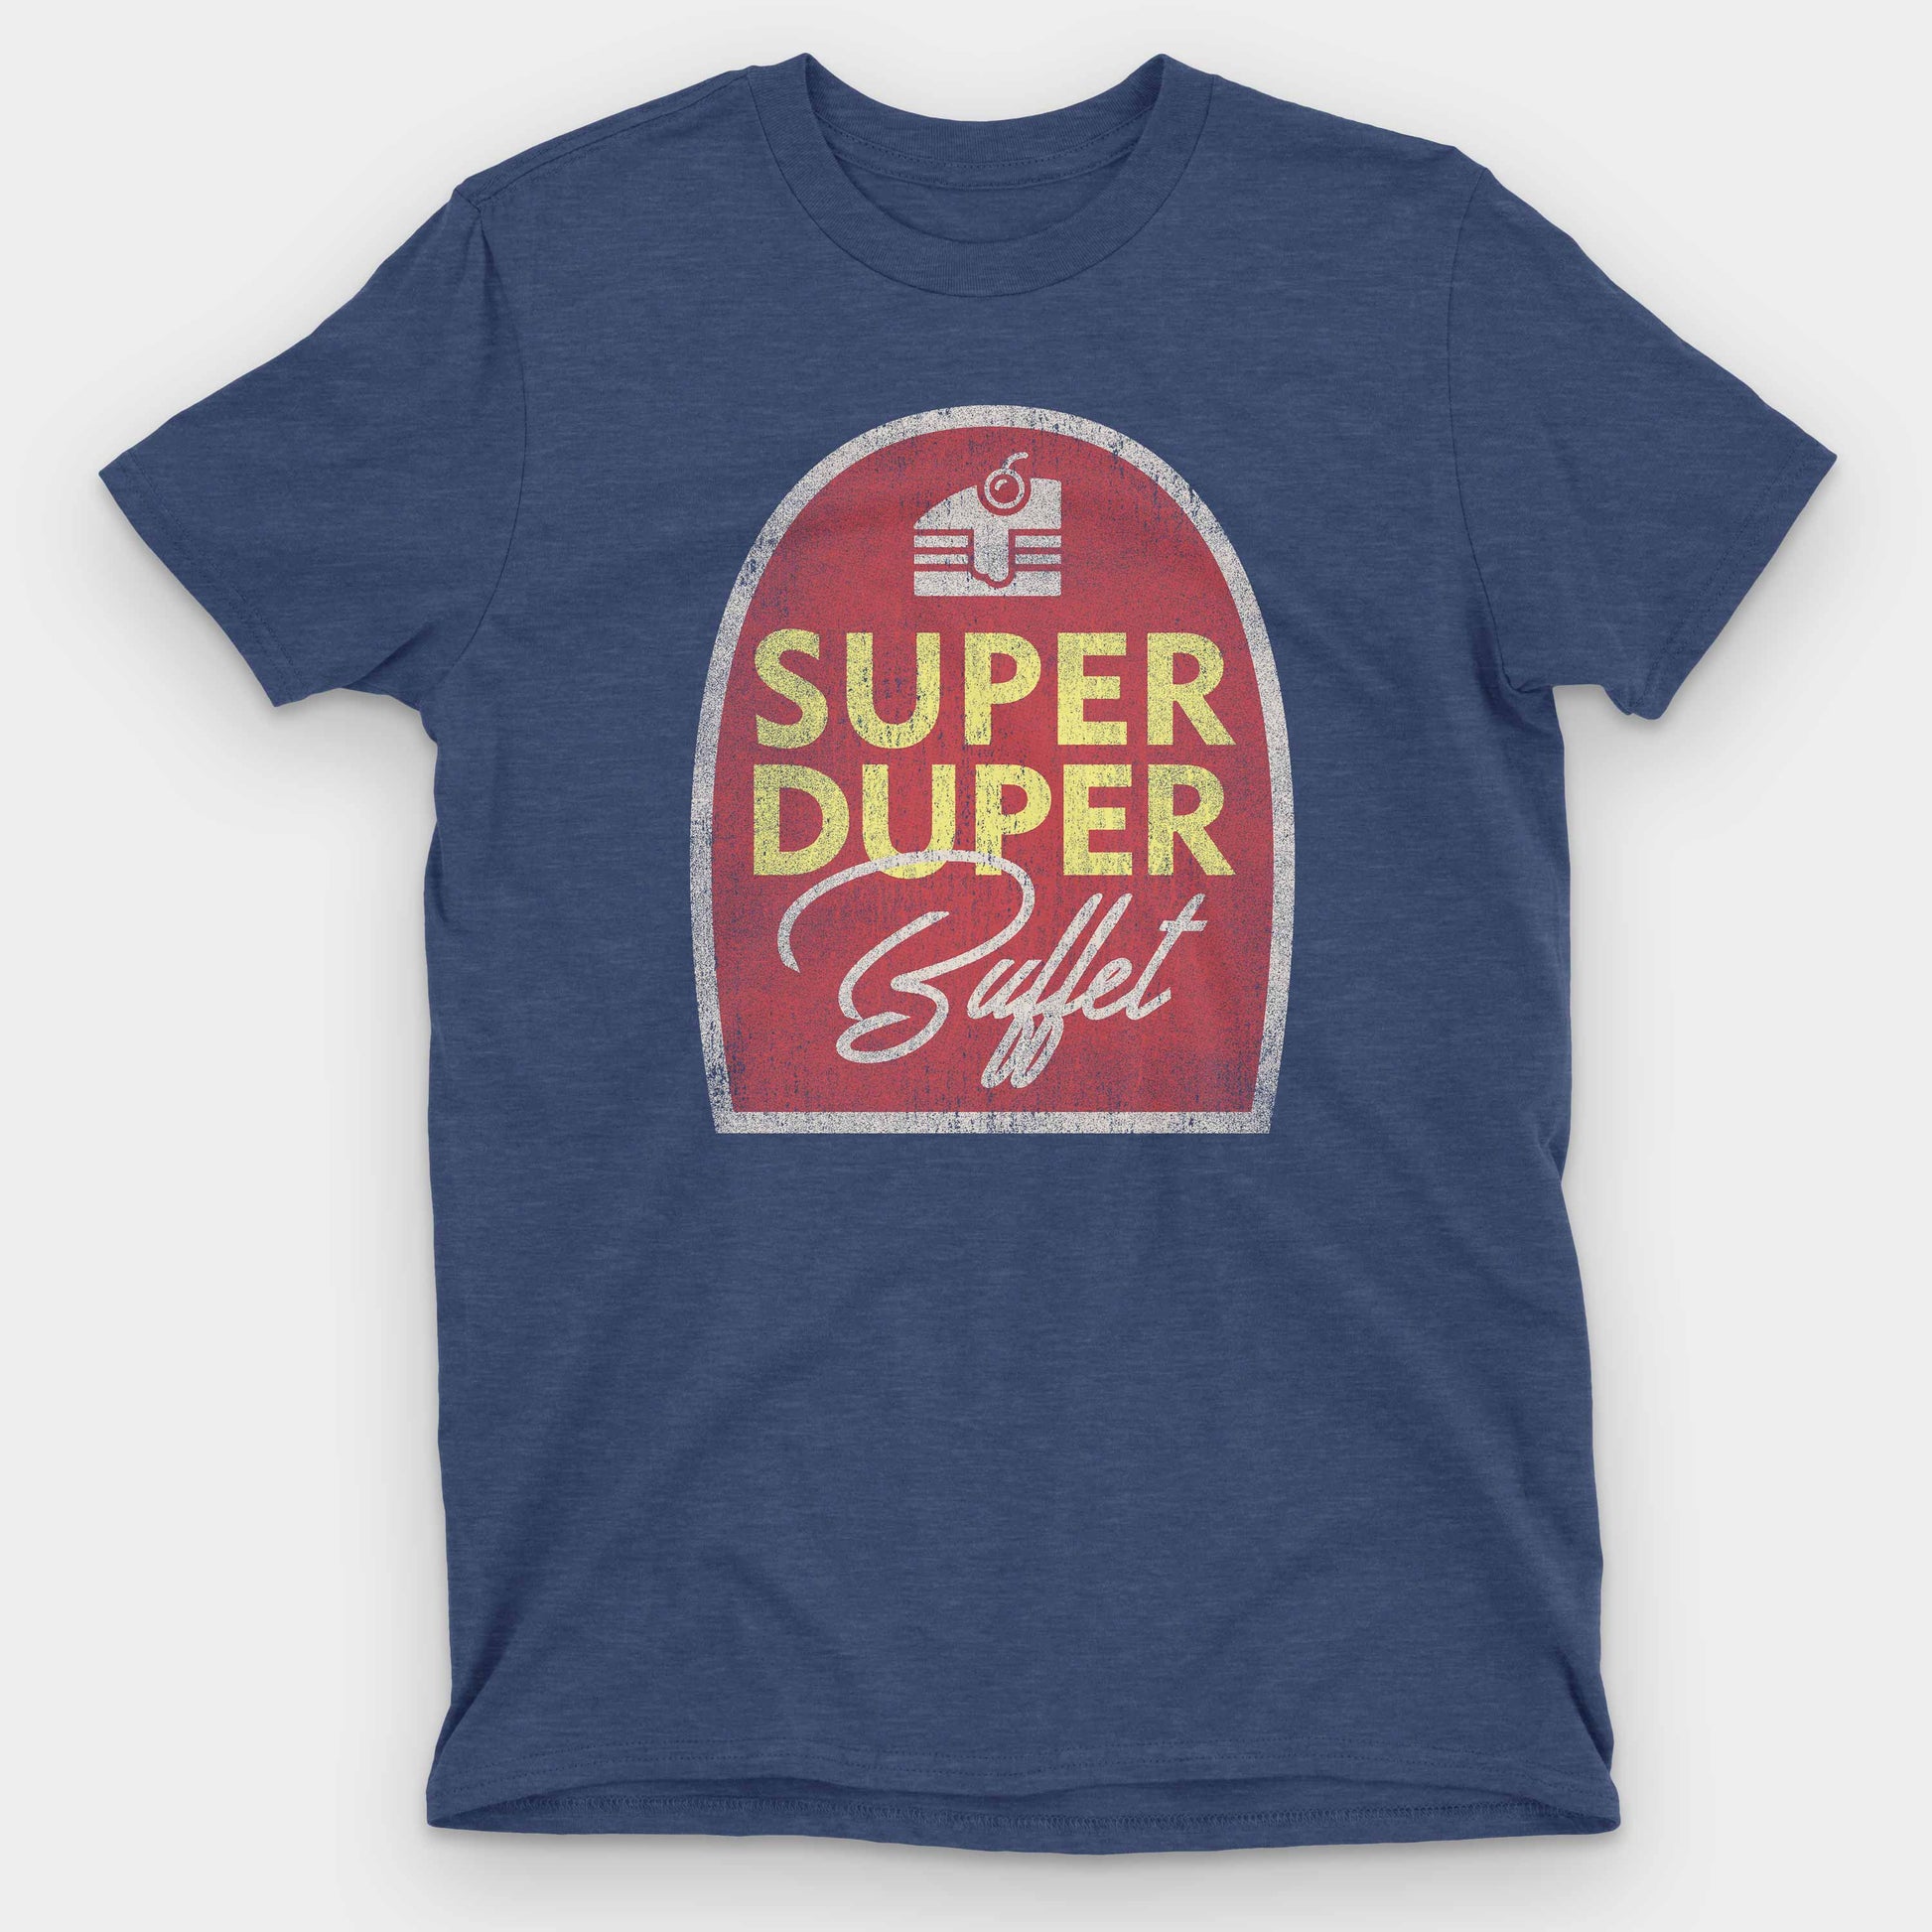 Heather Blue Super Duper Buffet Graphic T-Shirt by Snaxtime